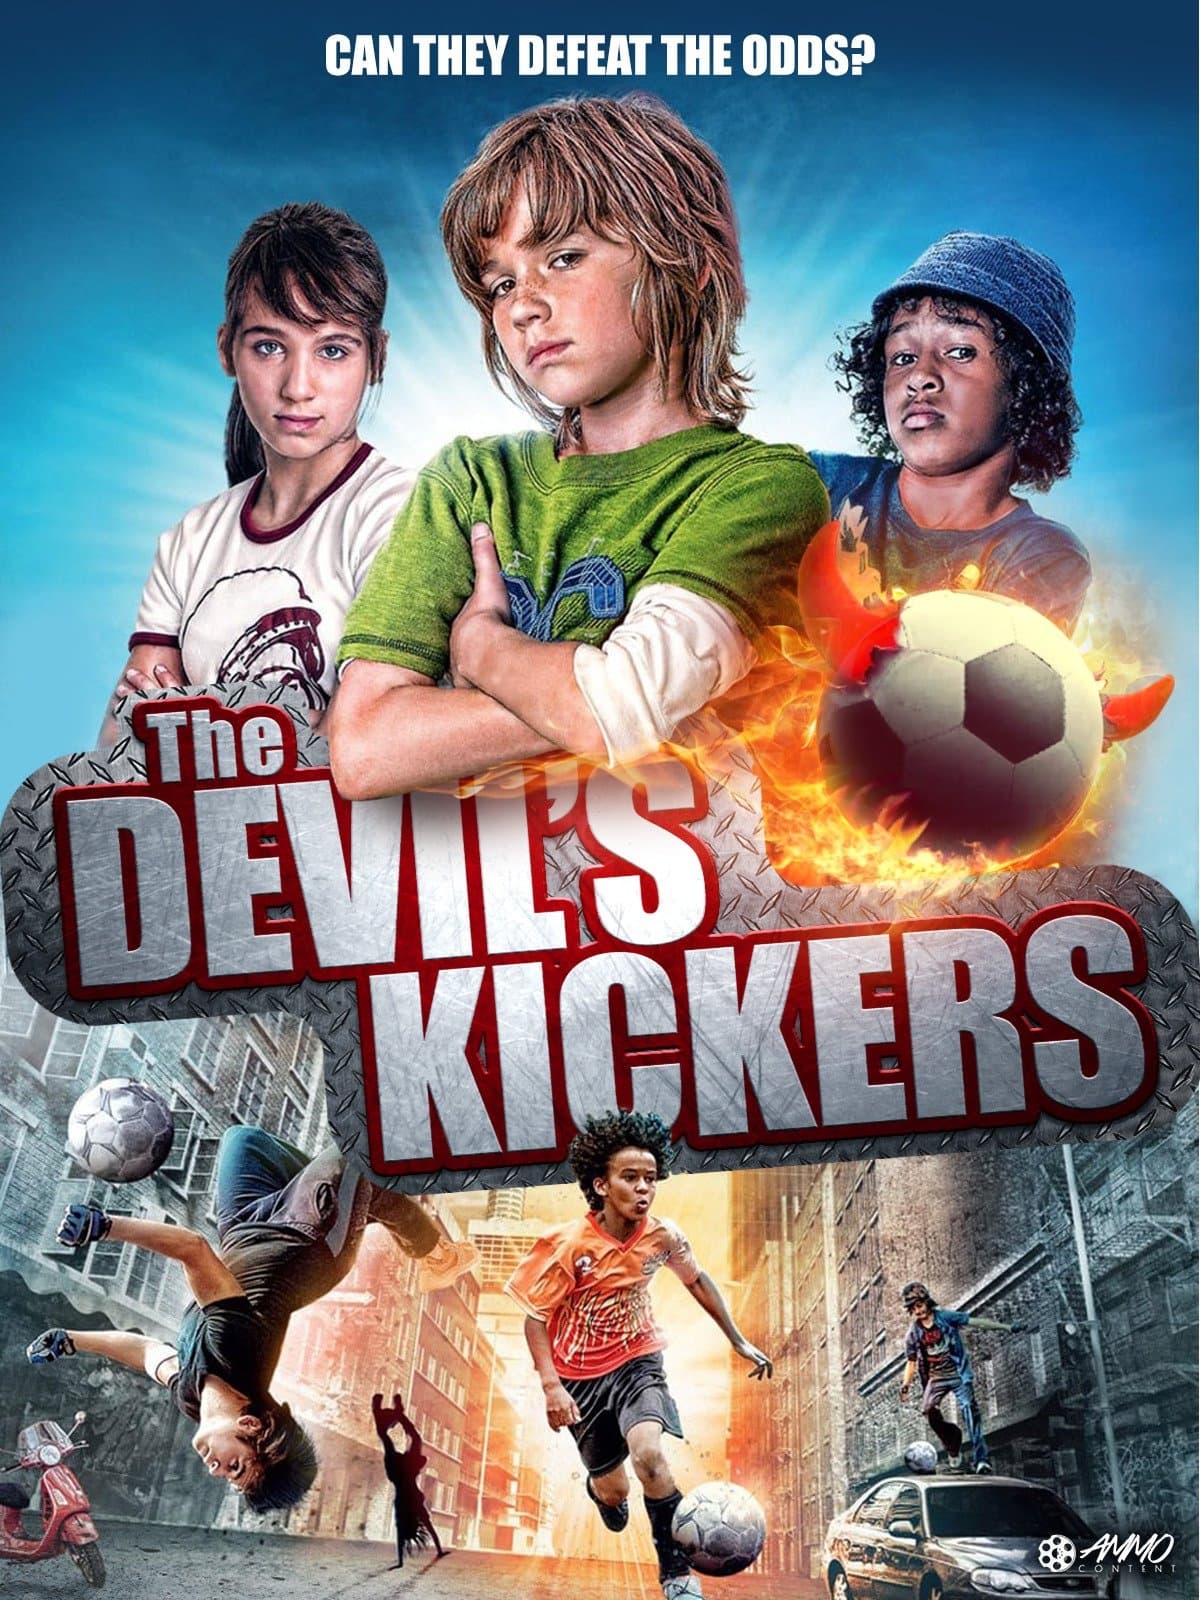 The Devil's Kickers (2010)